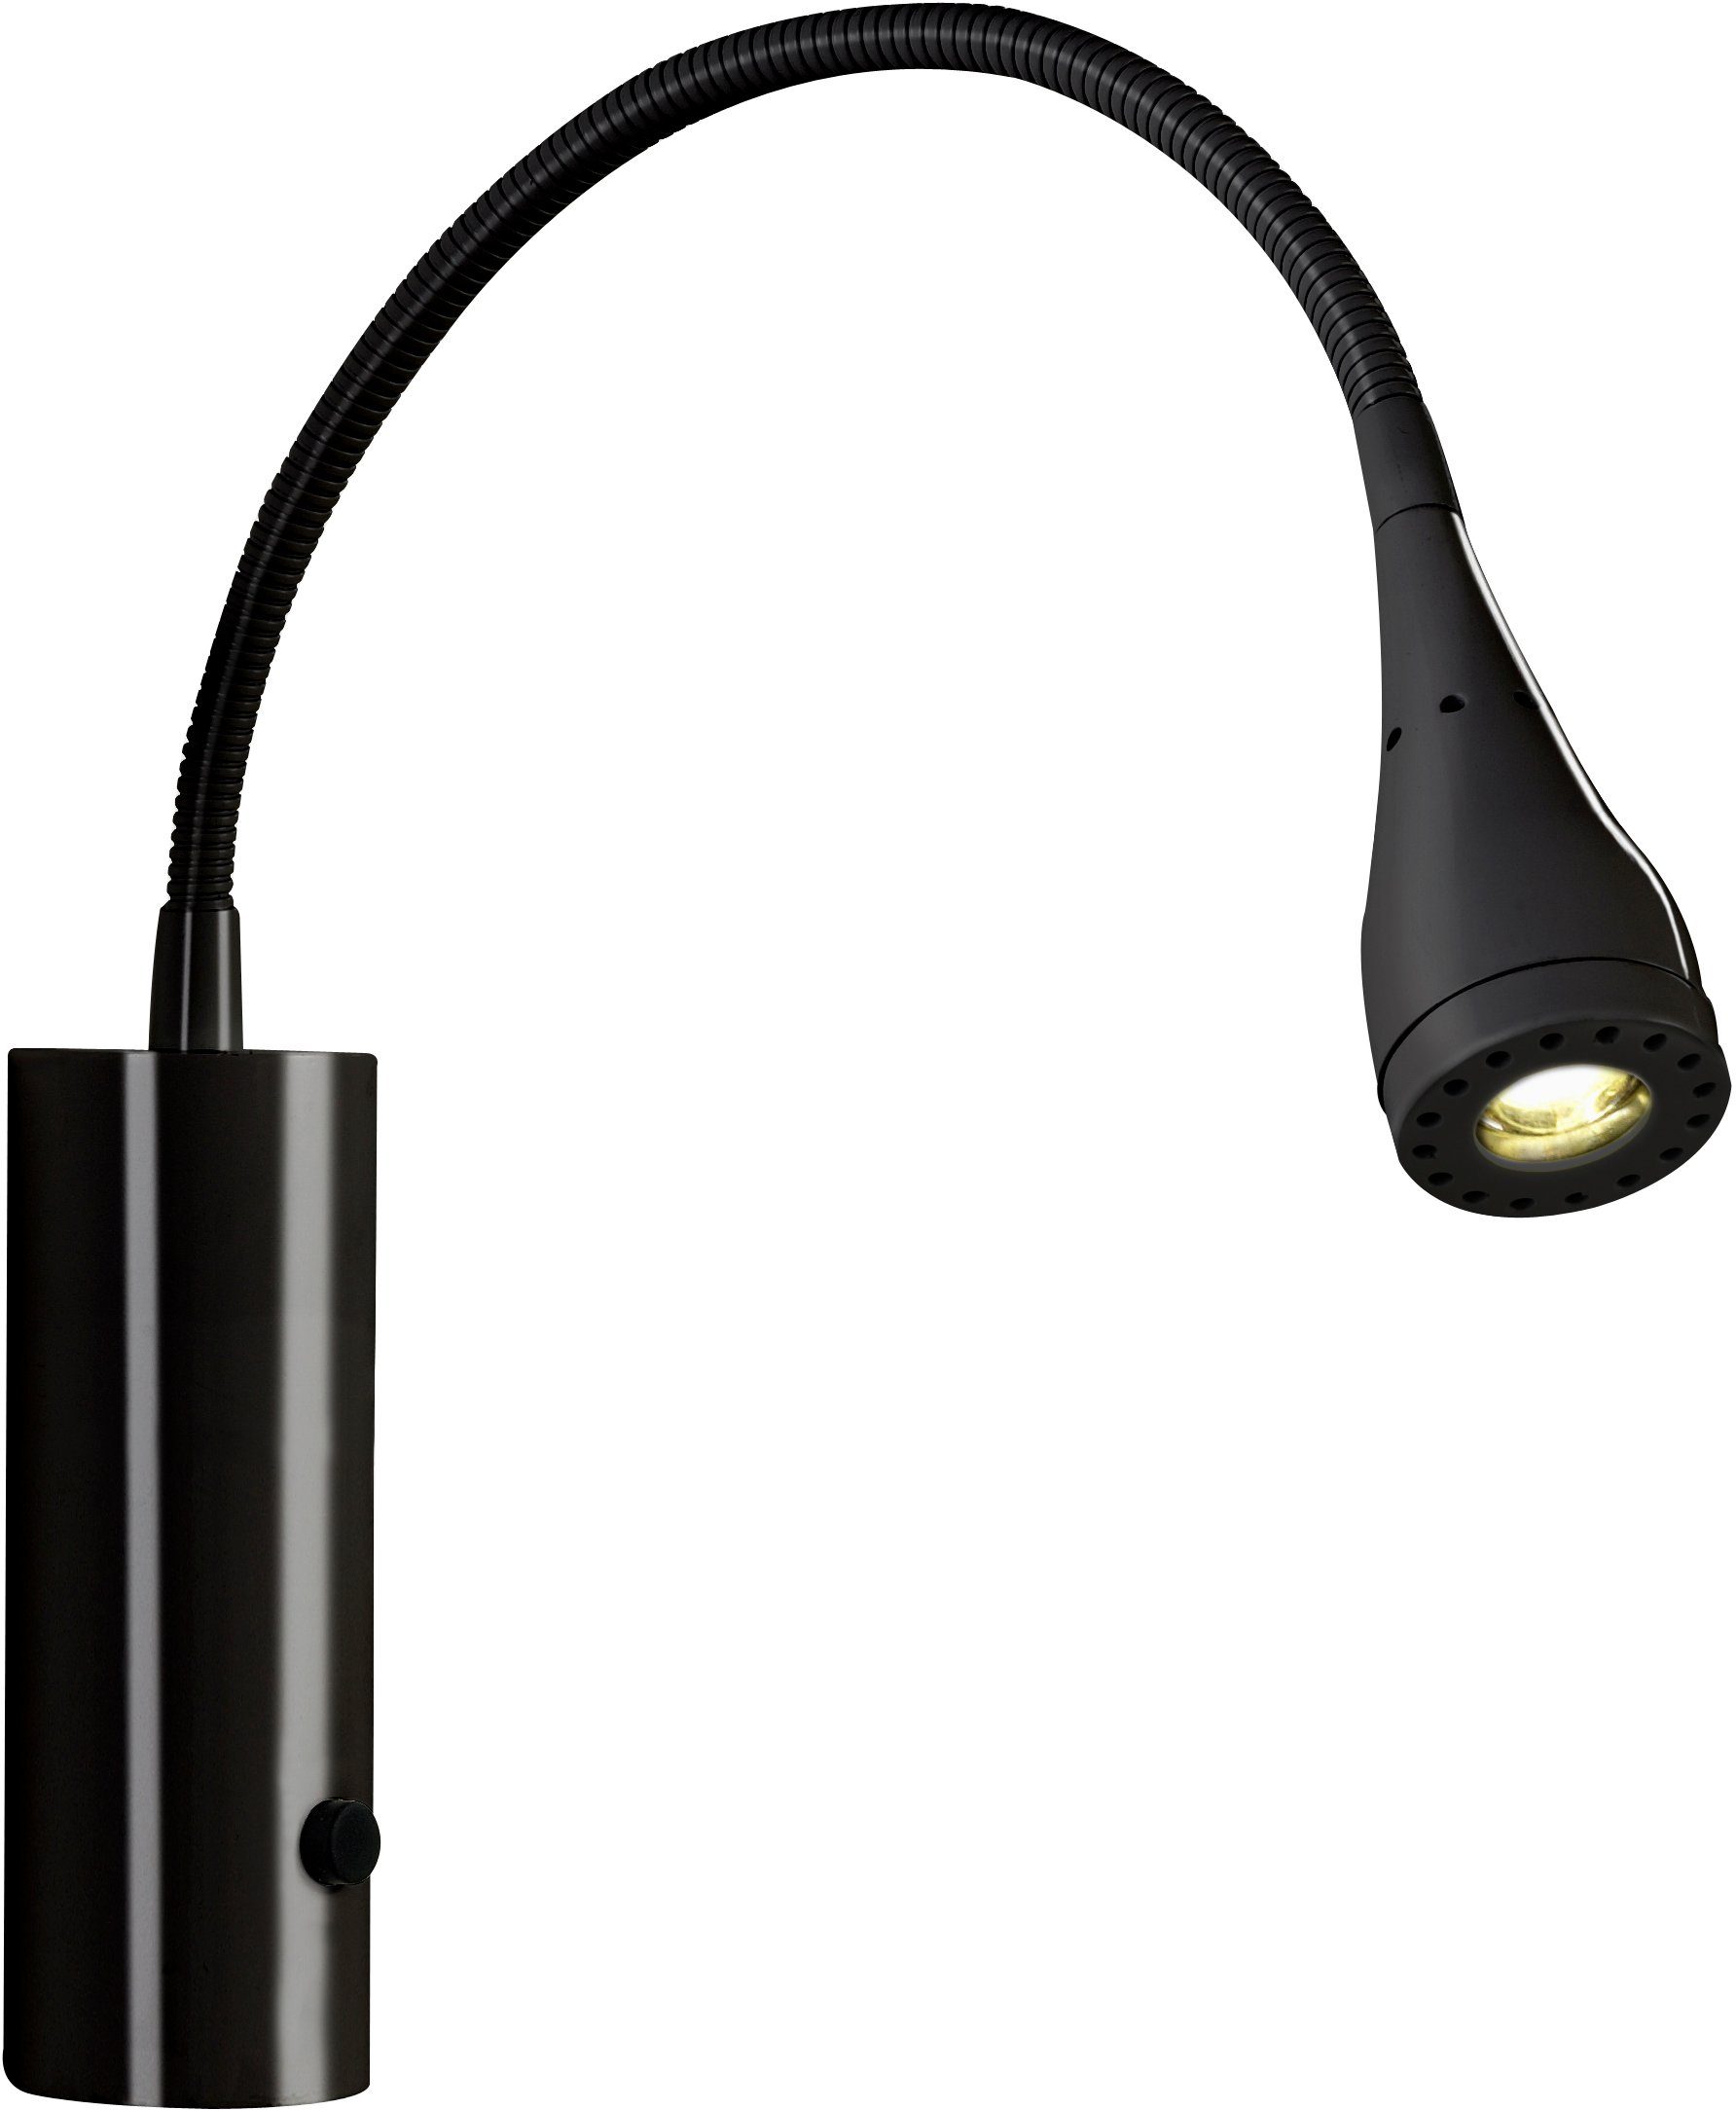 Nordlux LED Leselampe Mento, fest integriert, Warmweiß LED